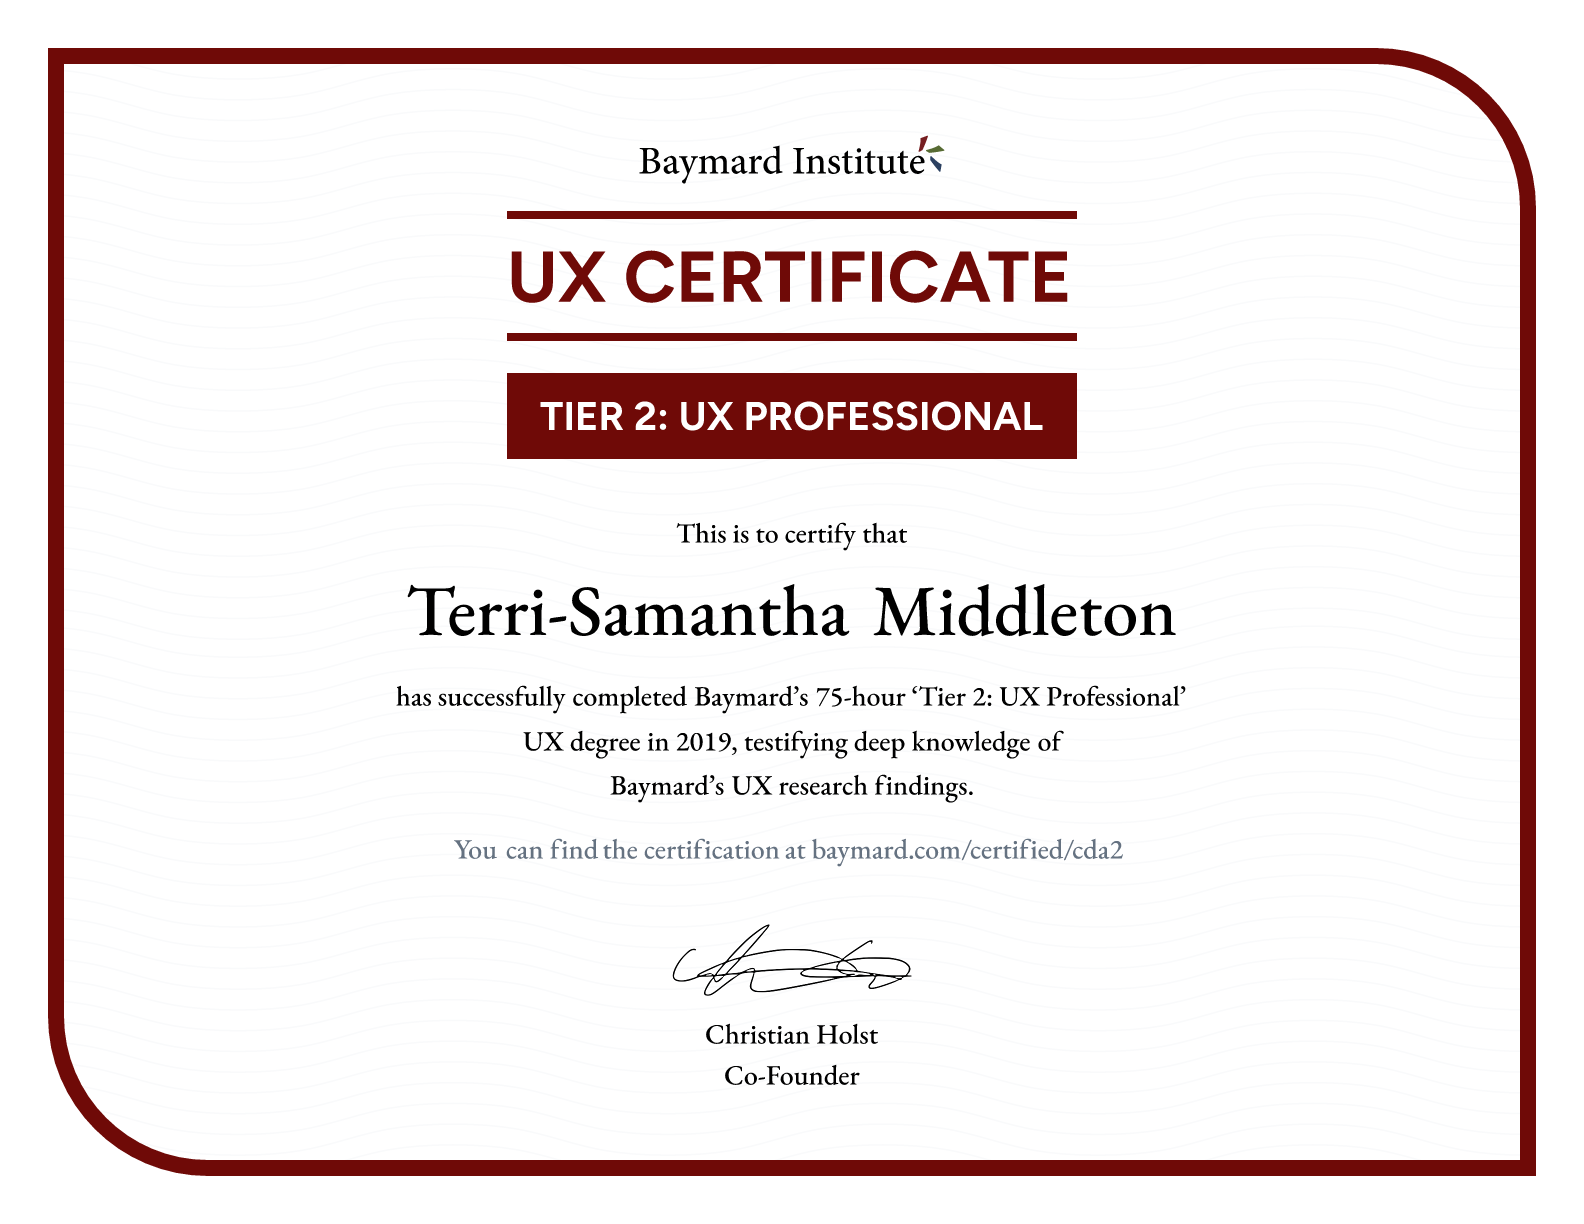 Terri-Samantha Middleton’s certificate